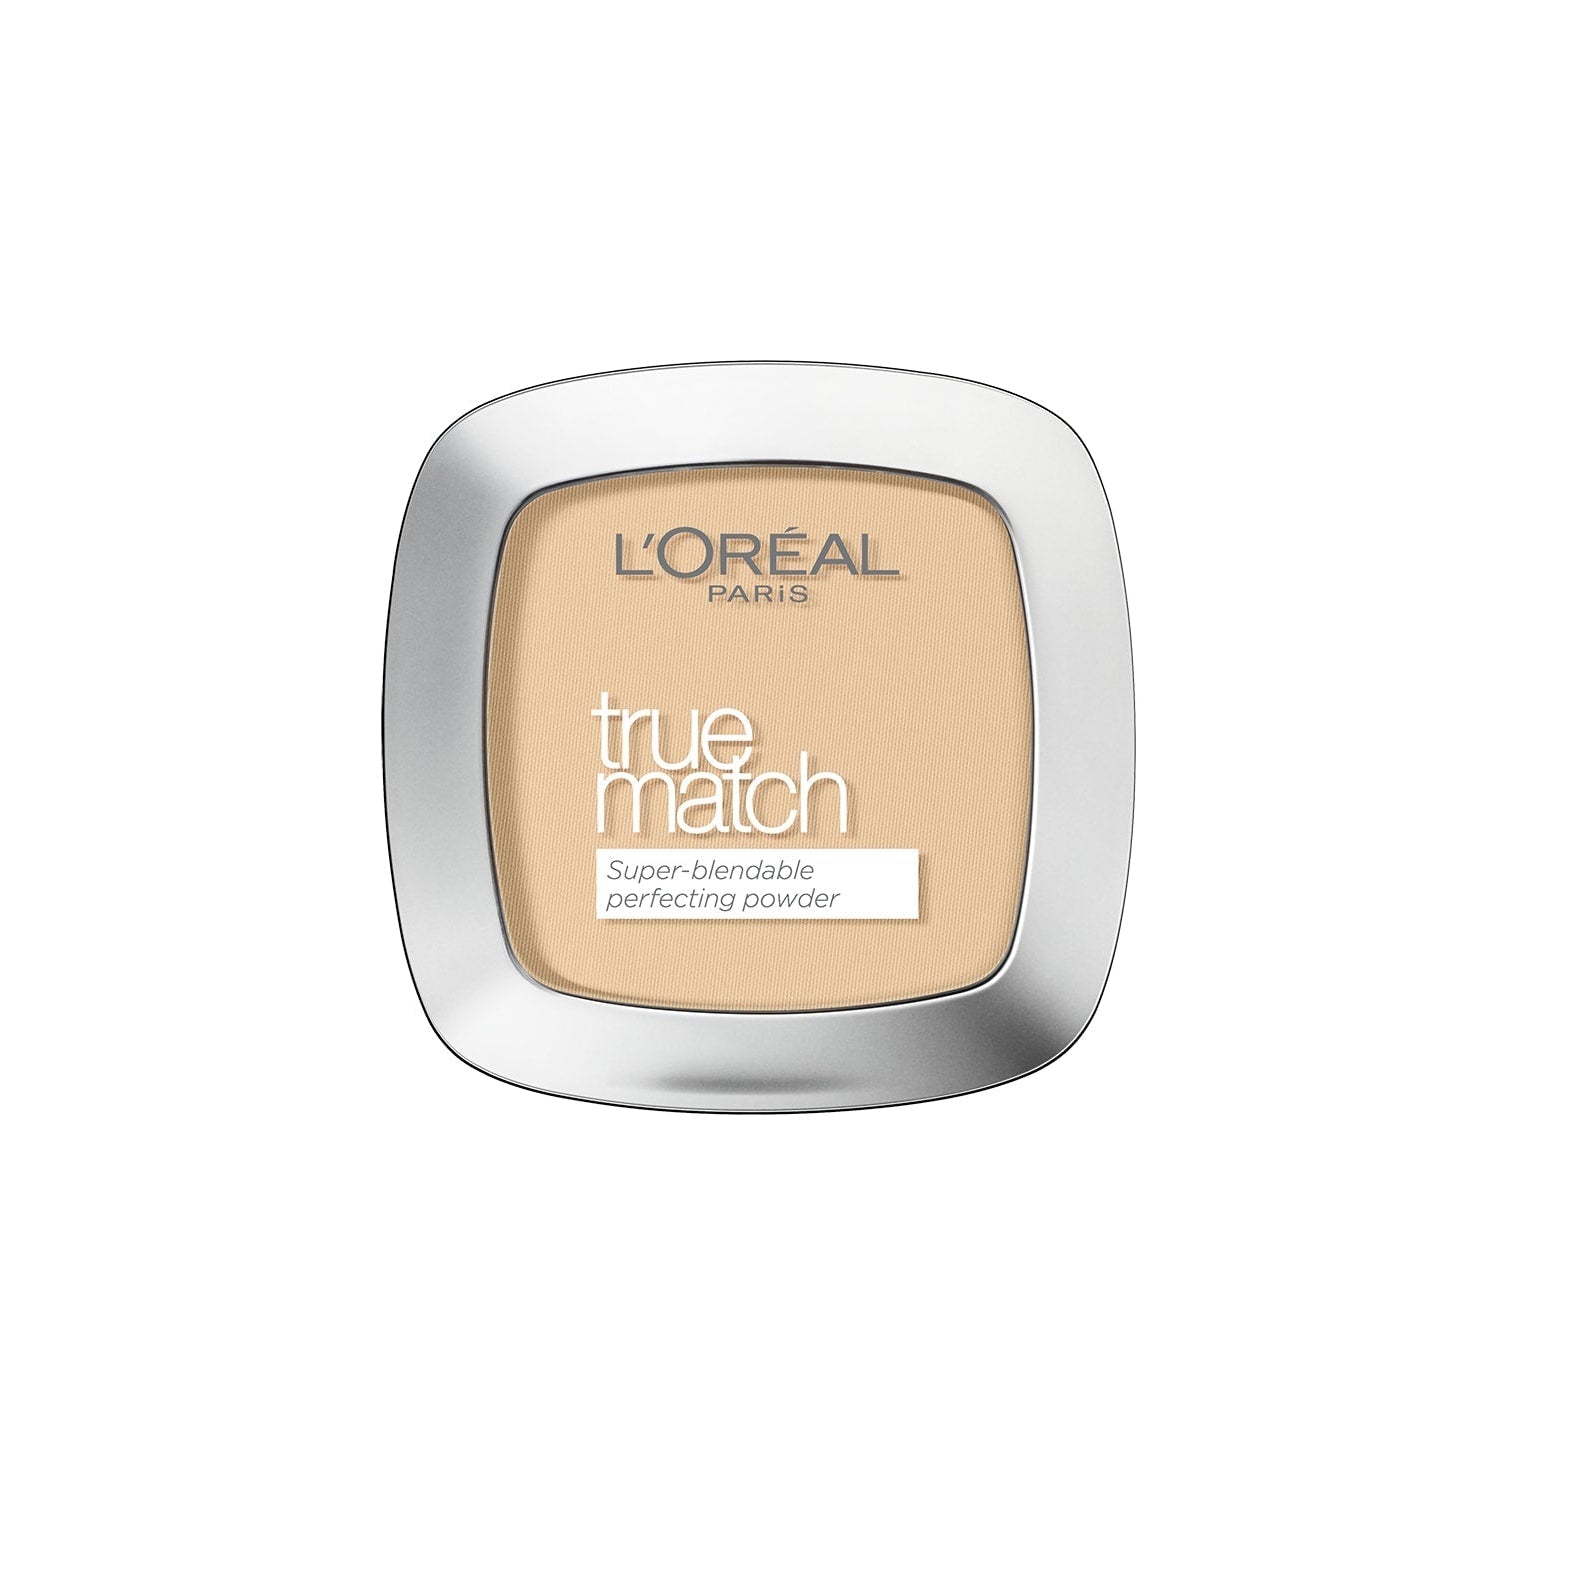 L'oréal Paris Makeup True Match Perfecting Powder